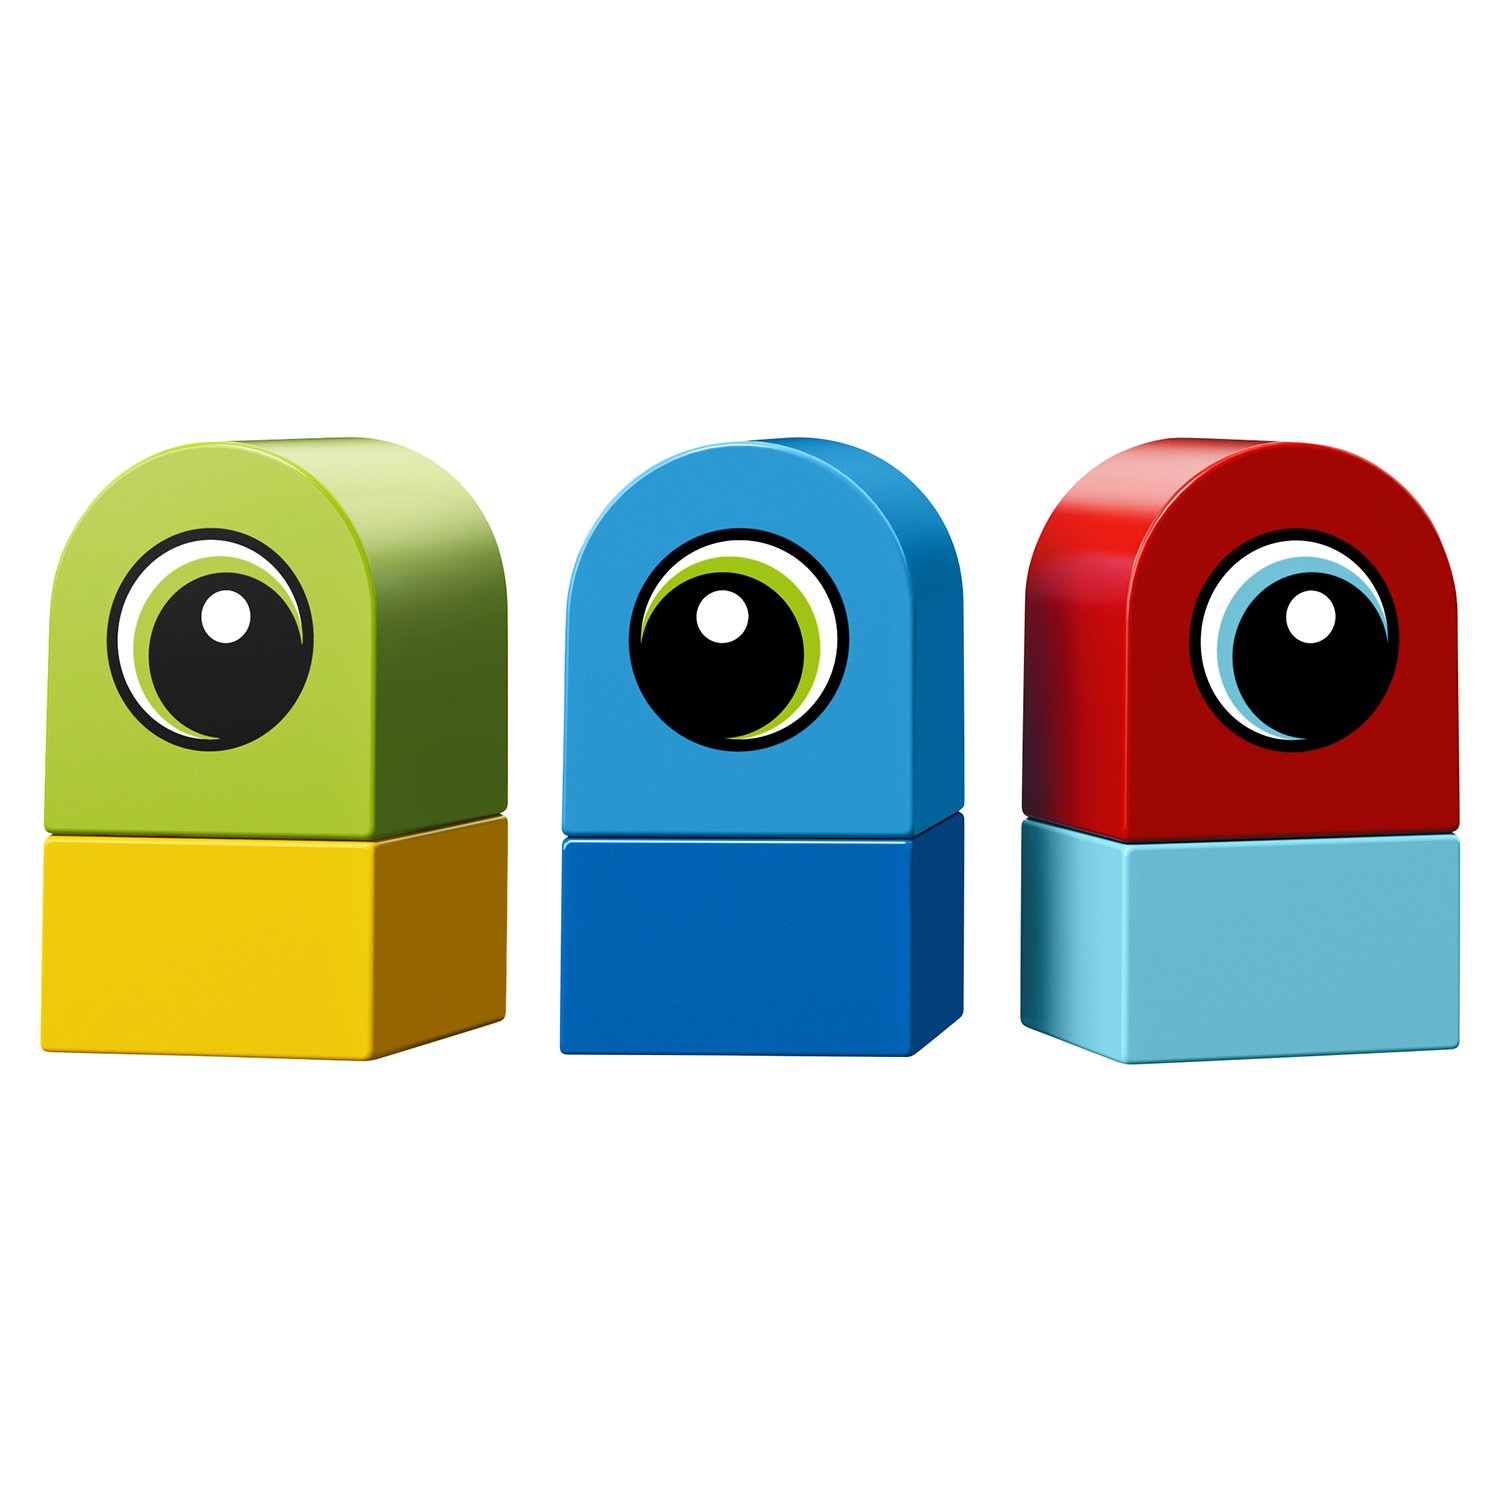 Дупло The LEGO Movie 2: Пришельцы с планеты Duplo®  